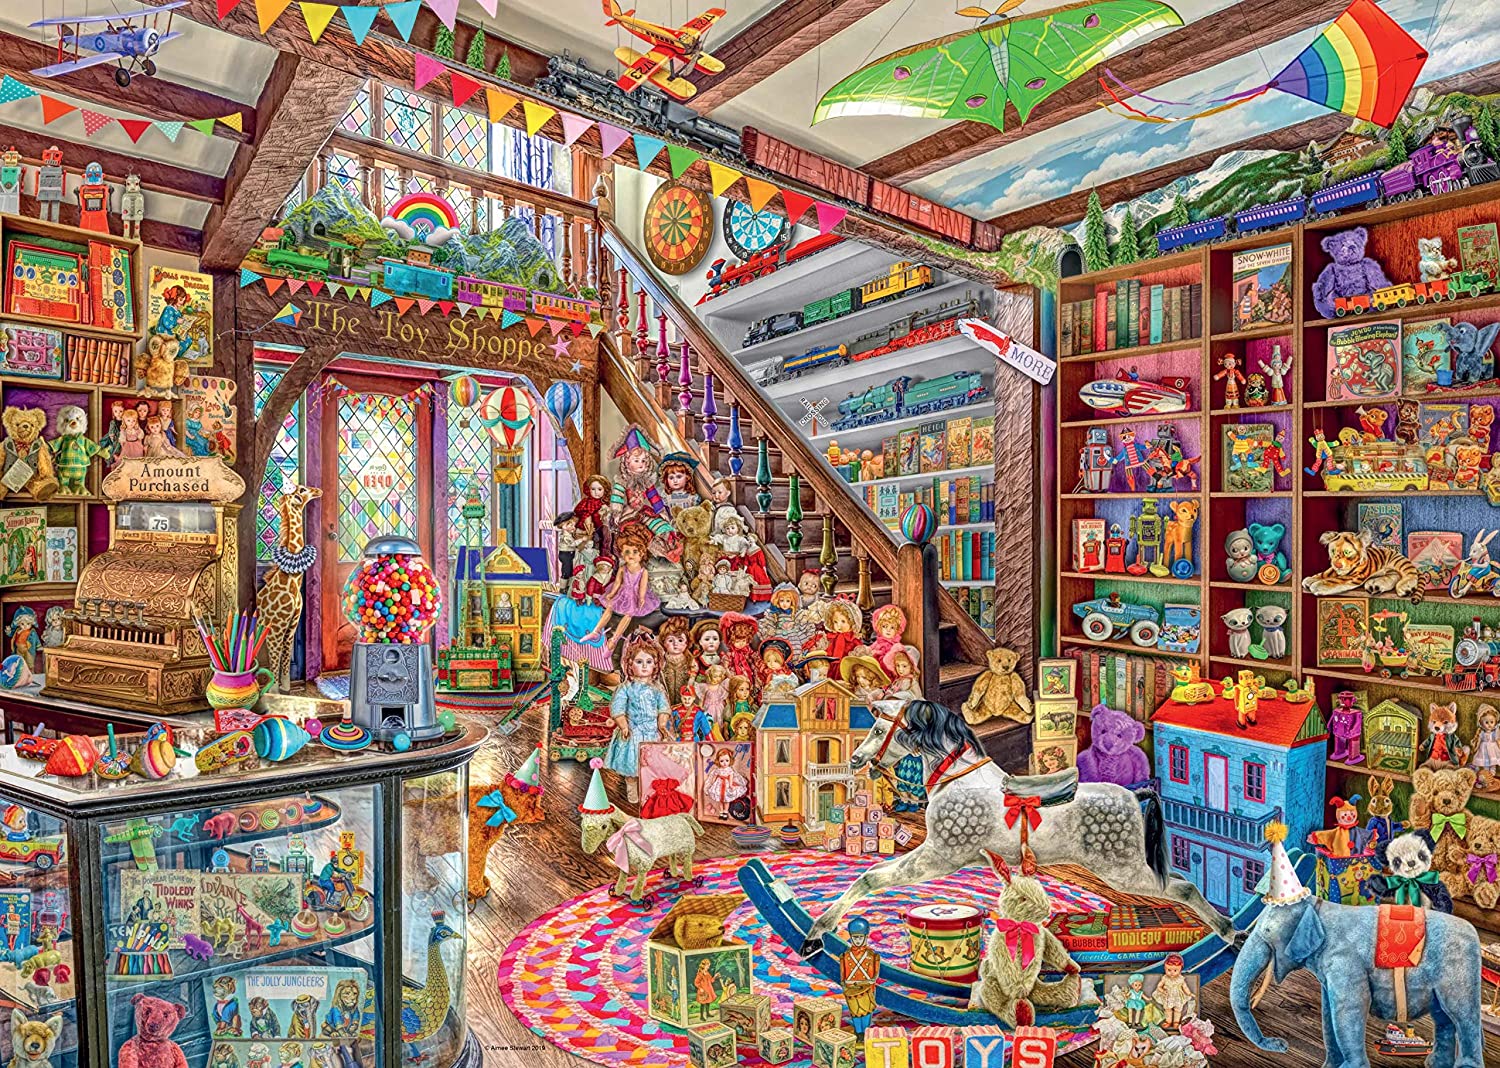 Puzzle 1000 piese - Fantasy Toy Shop | Ravensburger